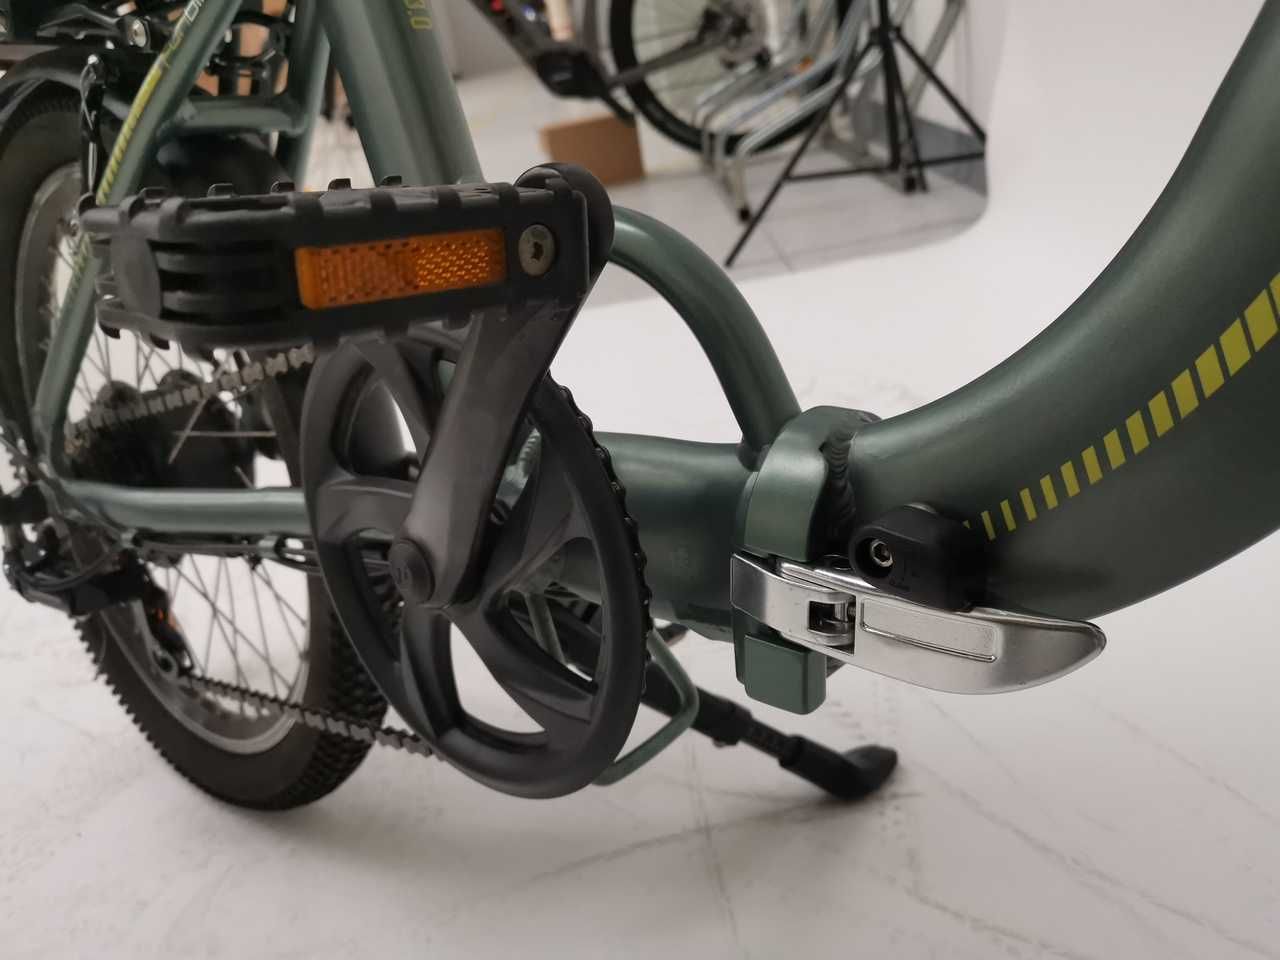 Rower elektryczny Funbike E-COMPACT 3.0 Green 13Ah stan igła